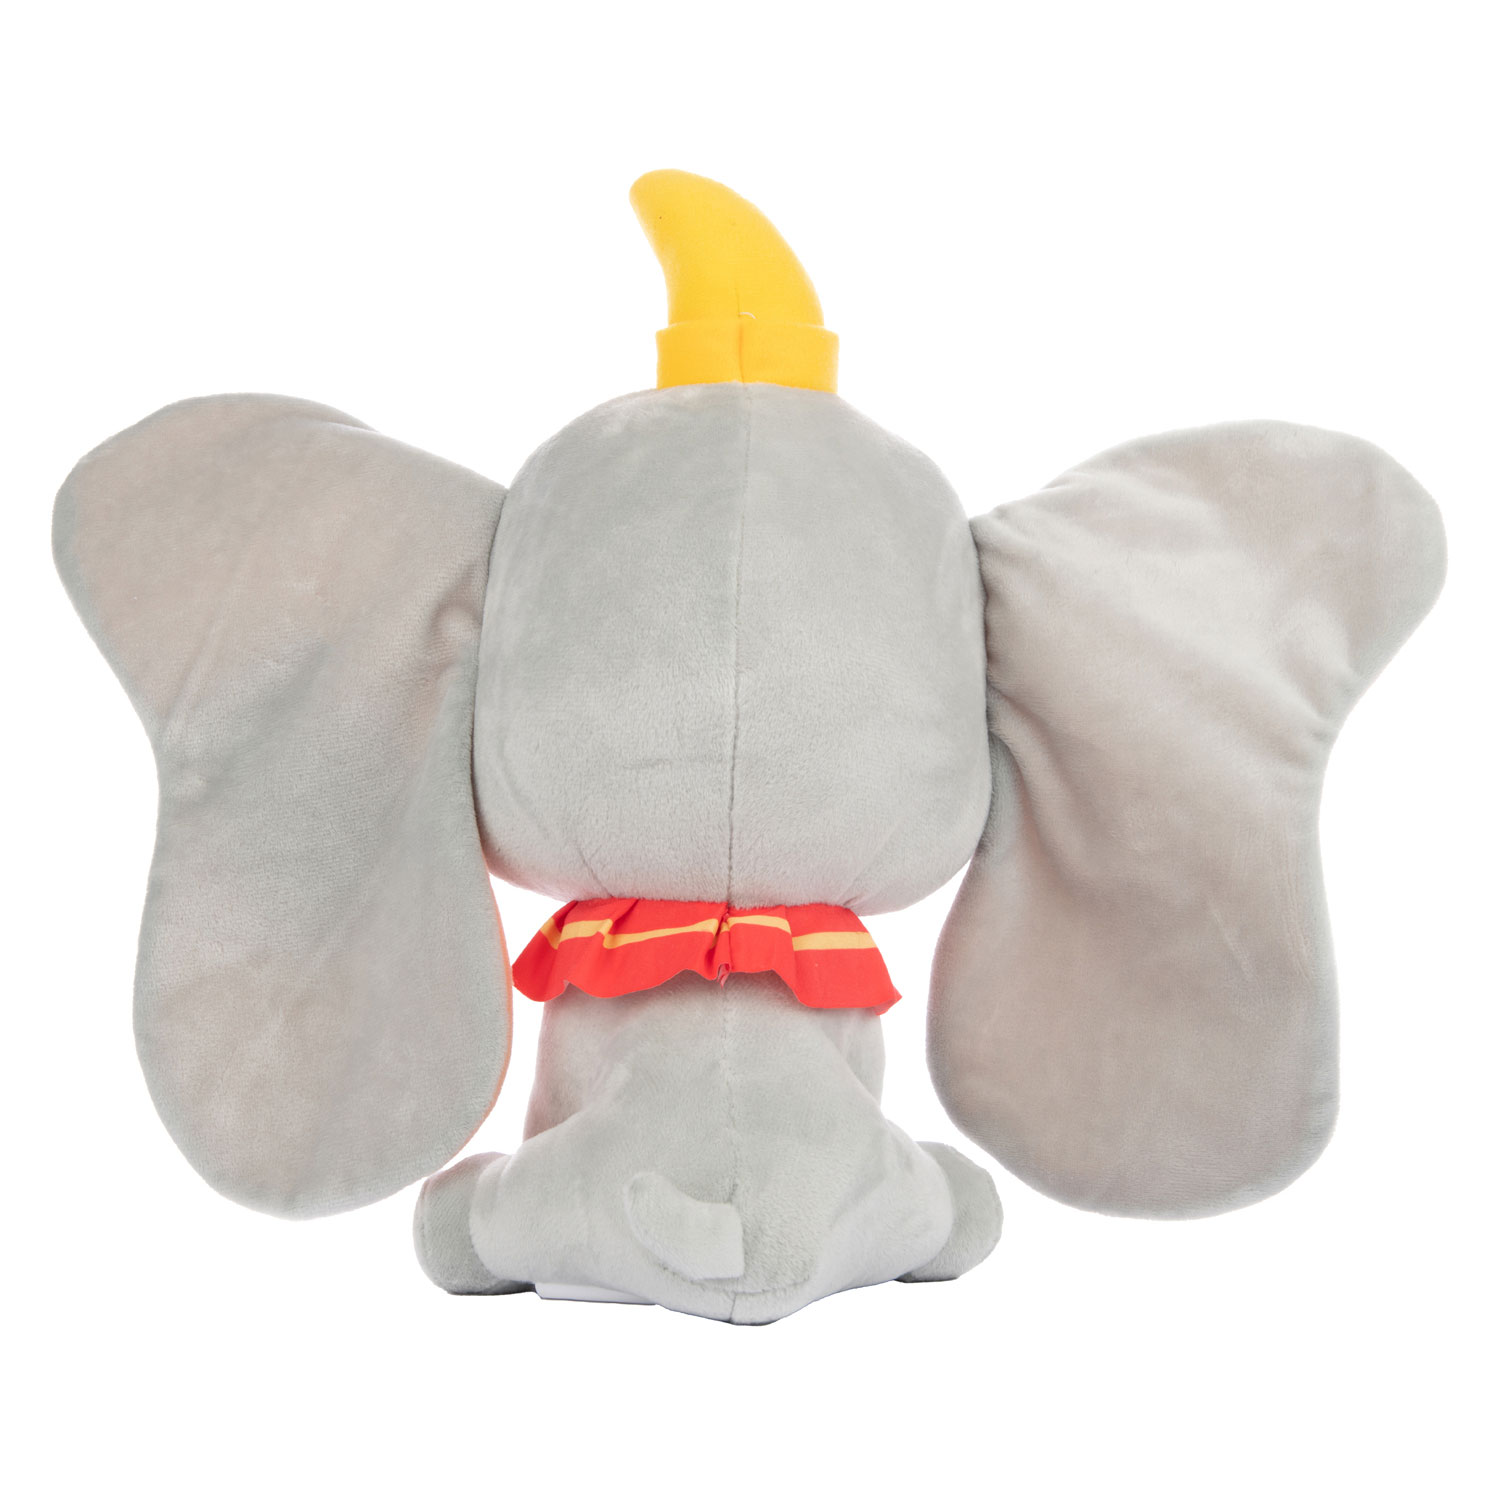 Disney Classic Plüschtier mit Sound – Dumbo, 30 cm